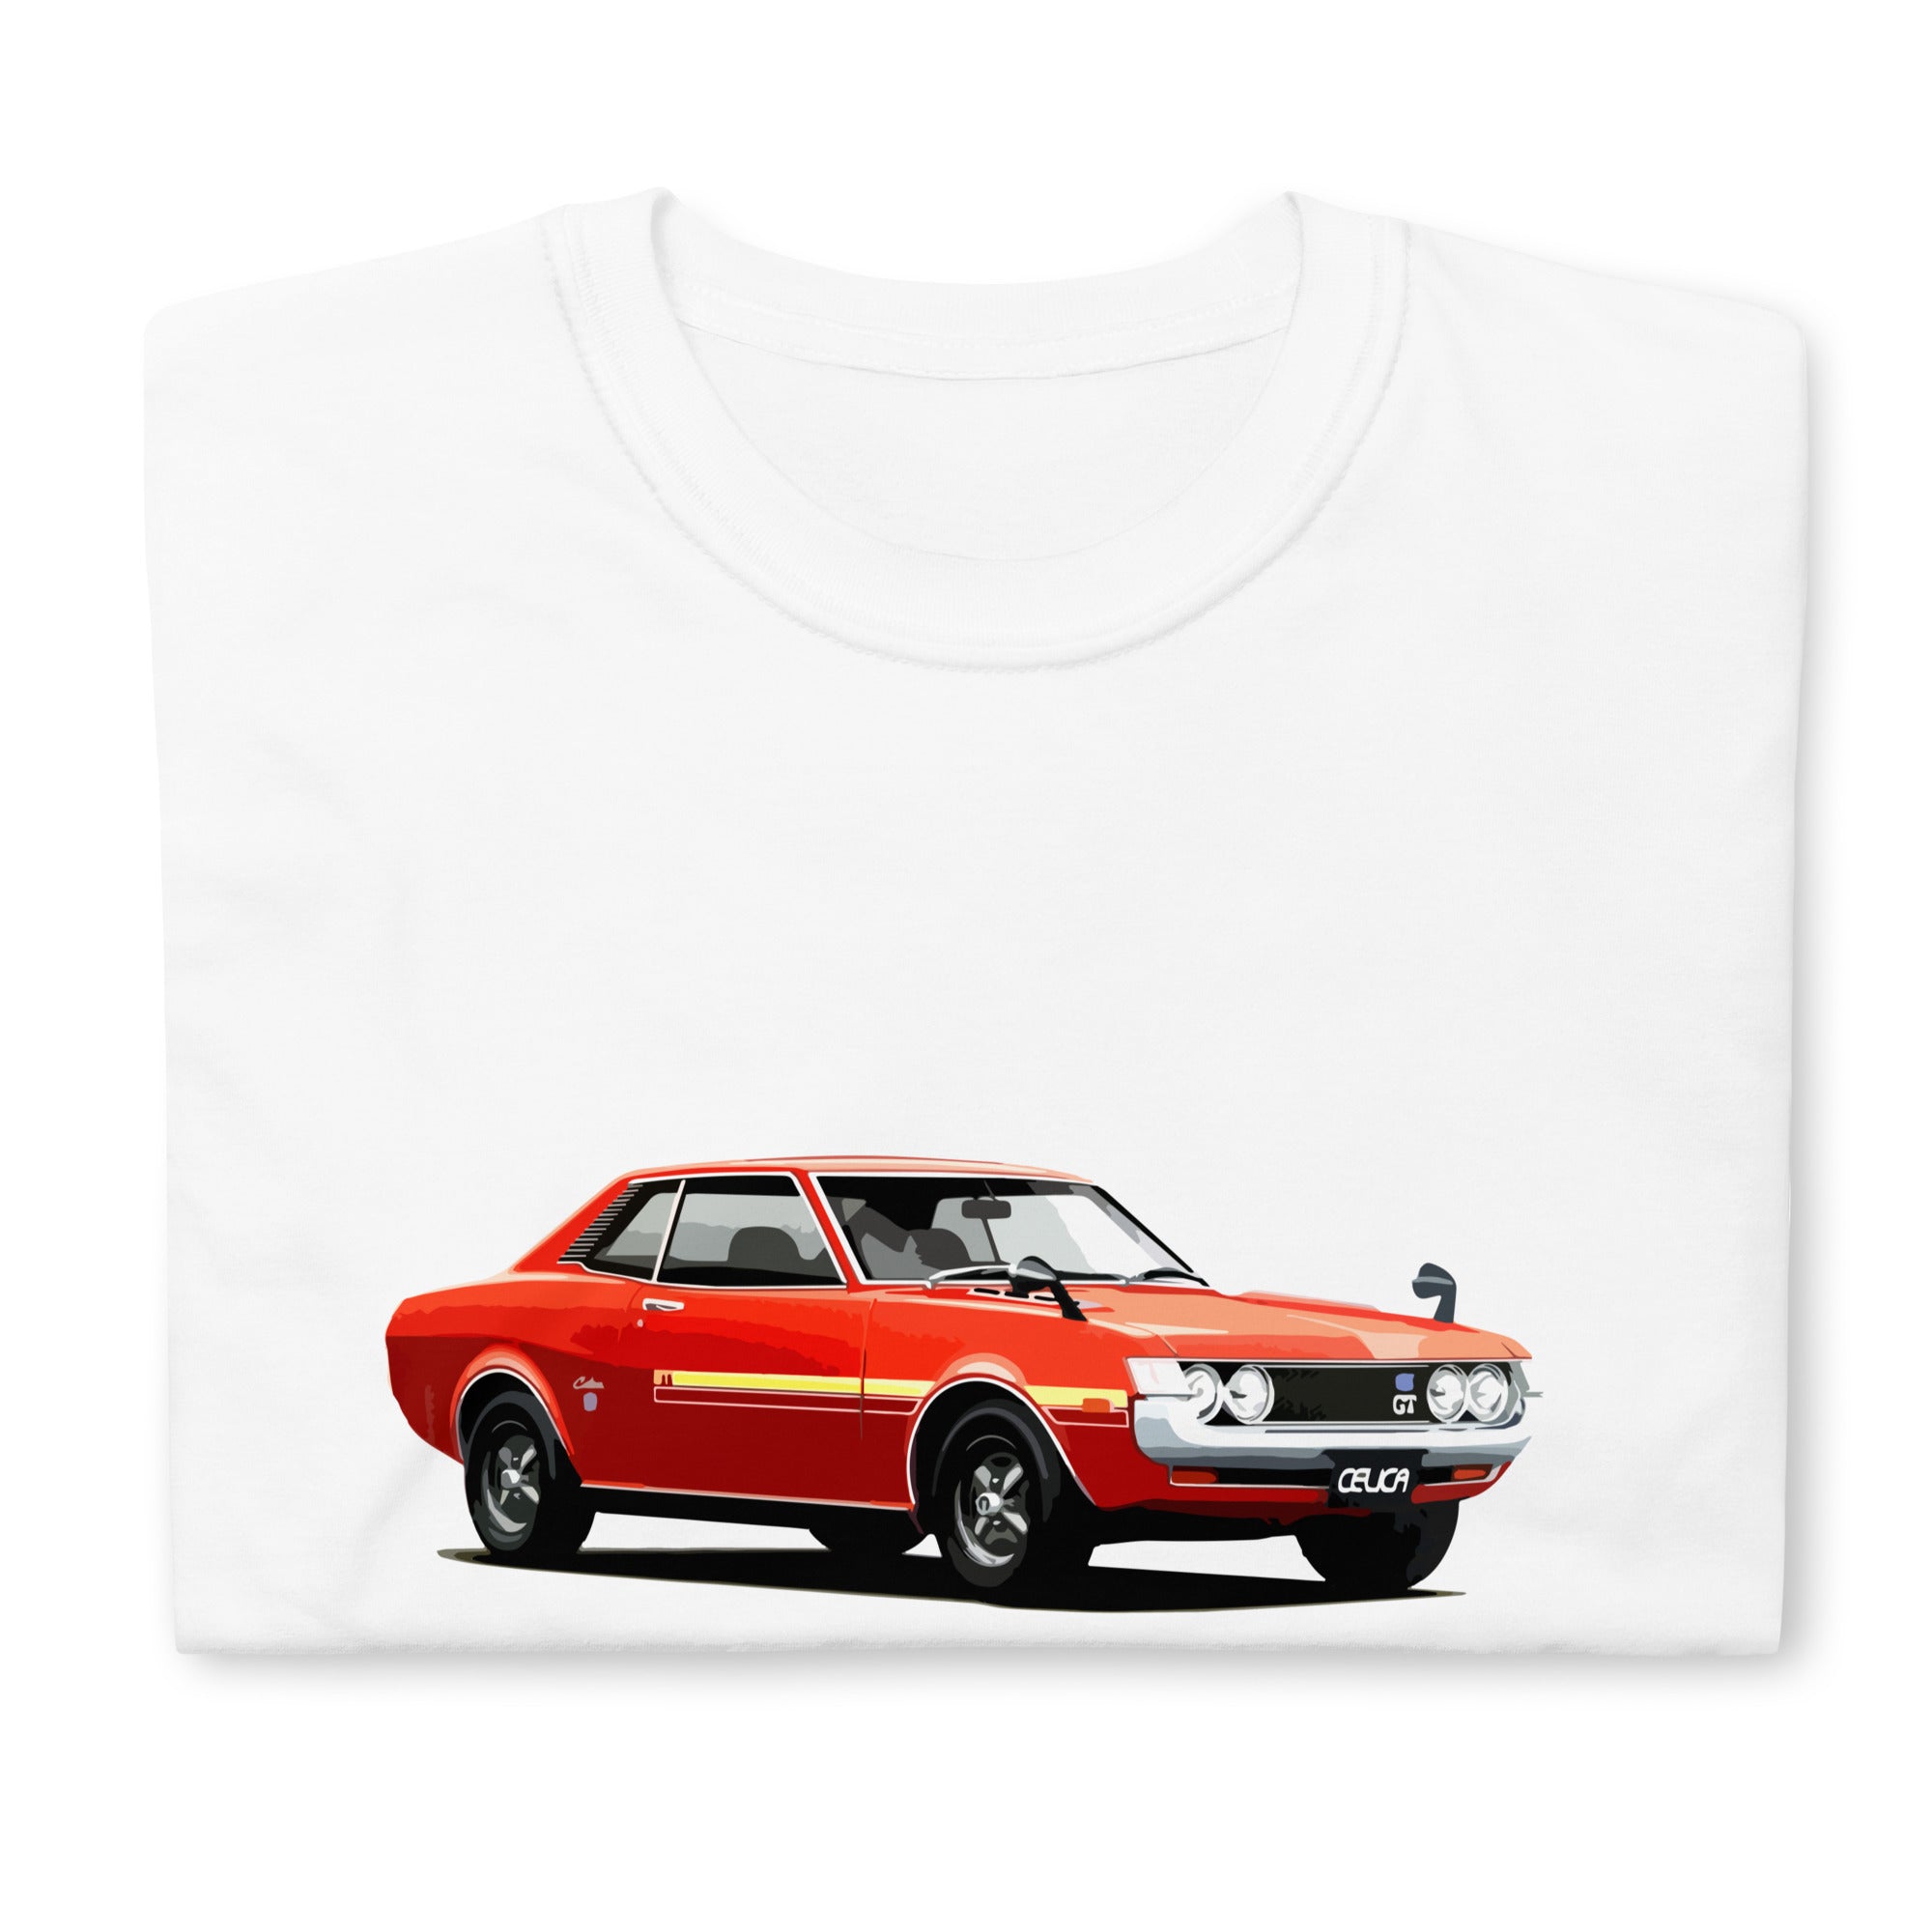 1972 Celica 1600GT JDM Japanese Vintage Car Short-Sleeve Unisex T-Shirt